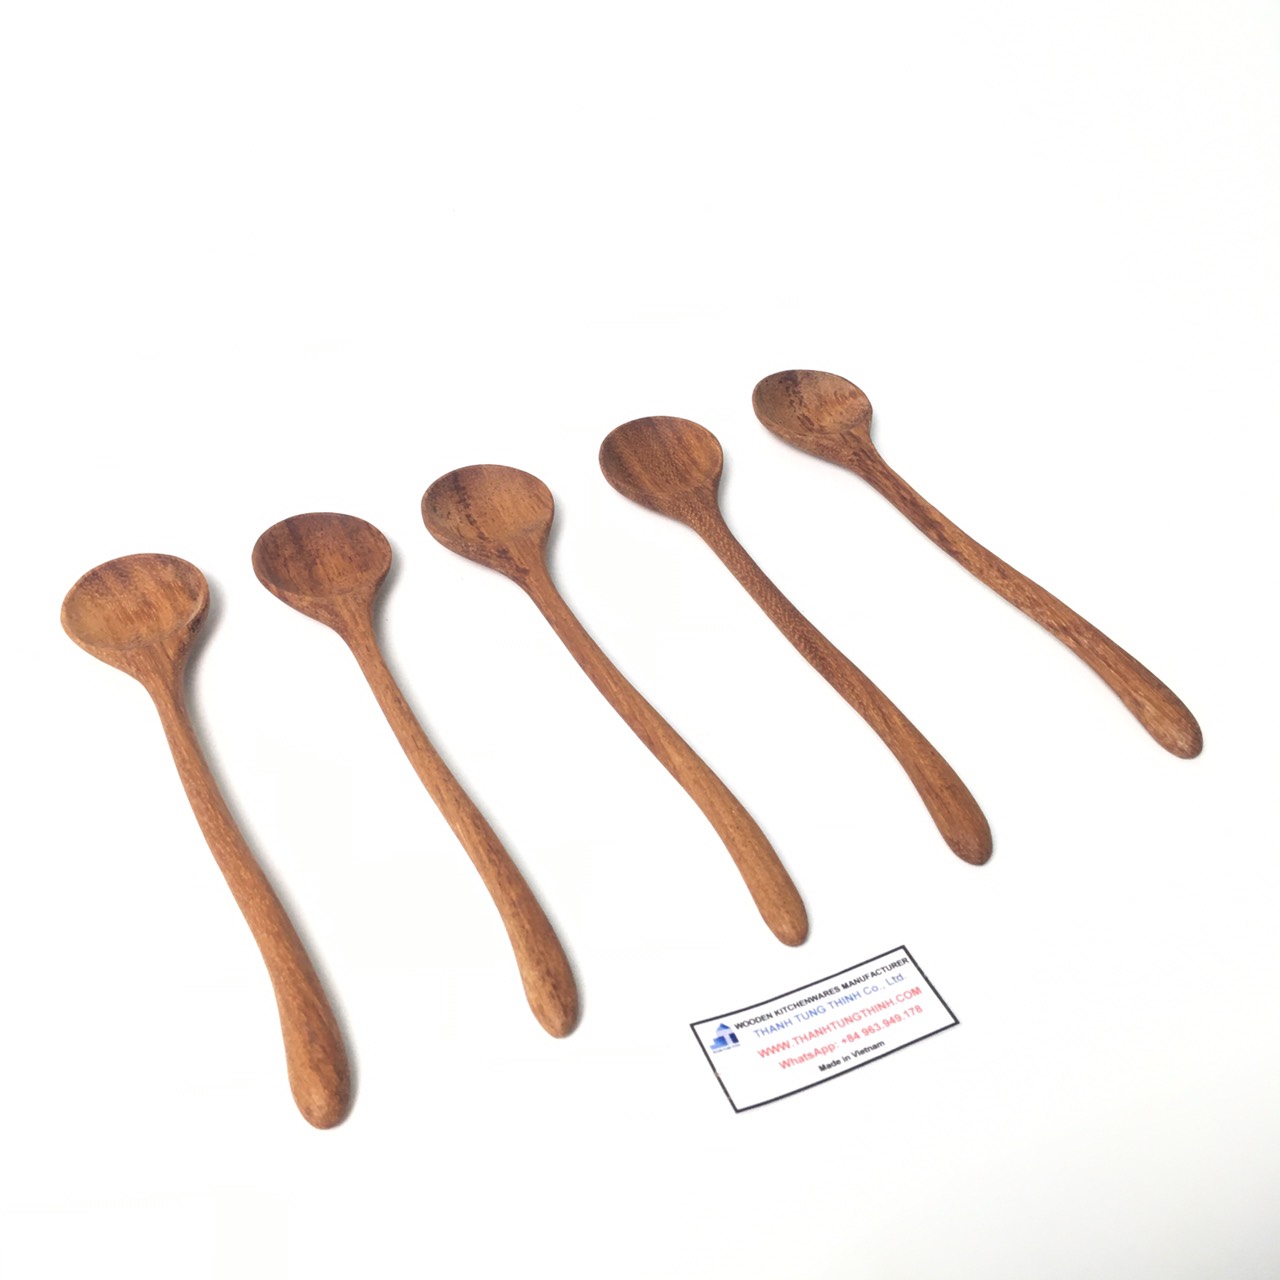 Simple designed Wooden Spoon set